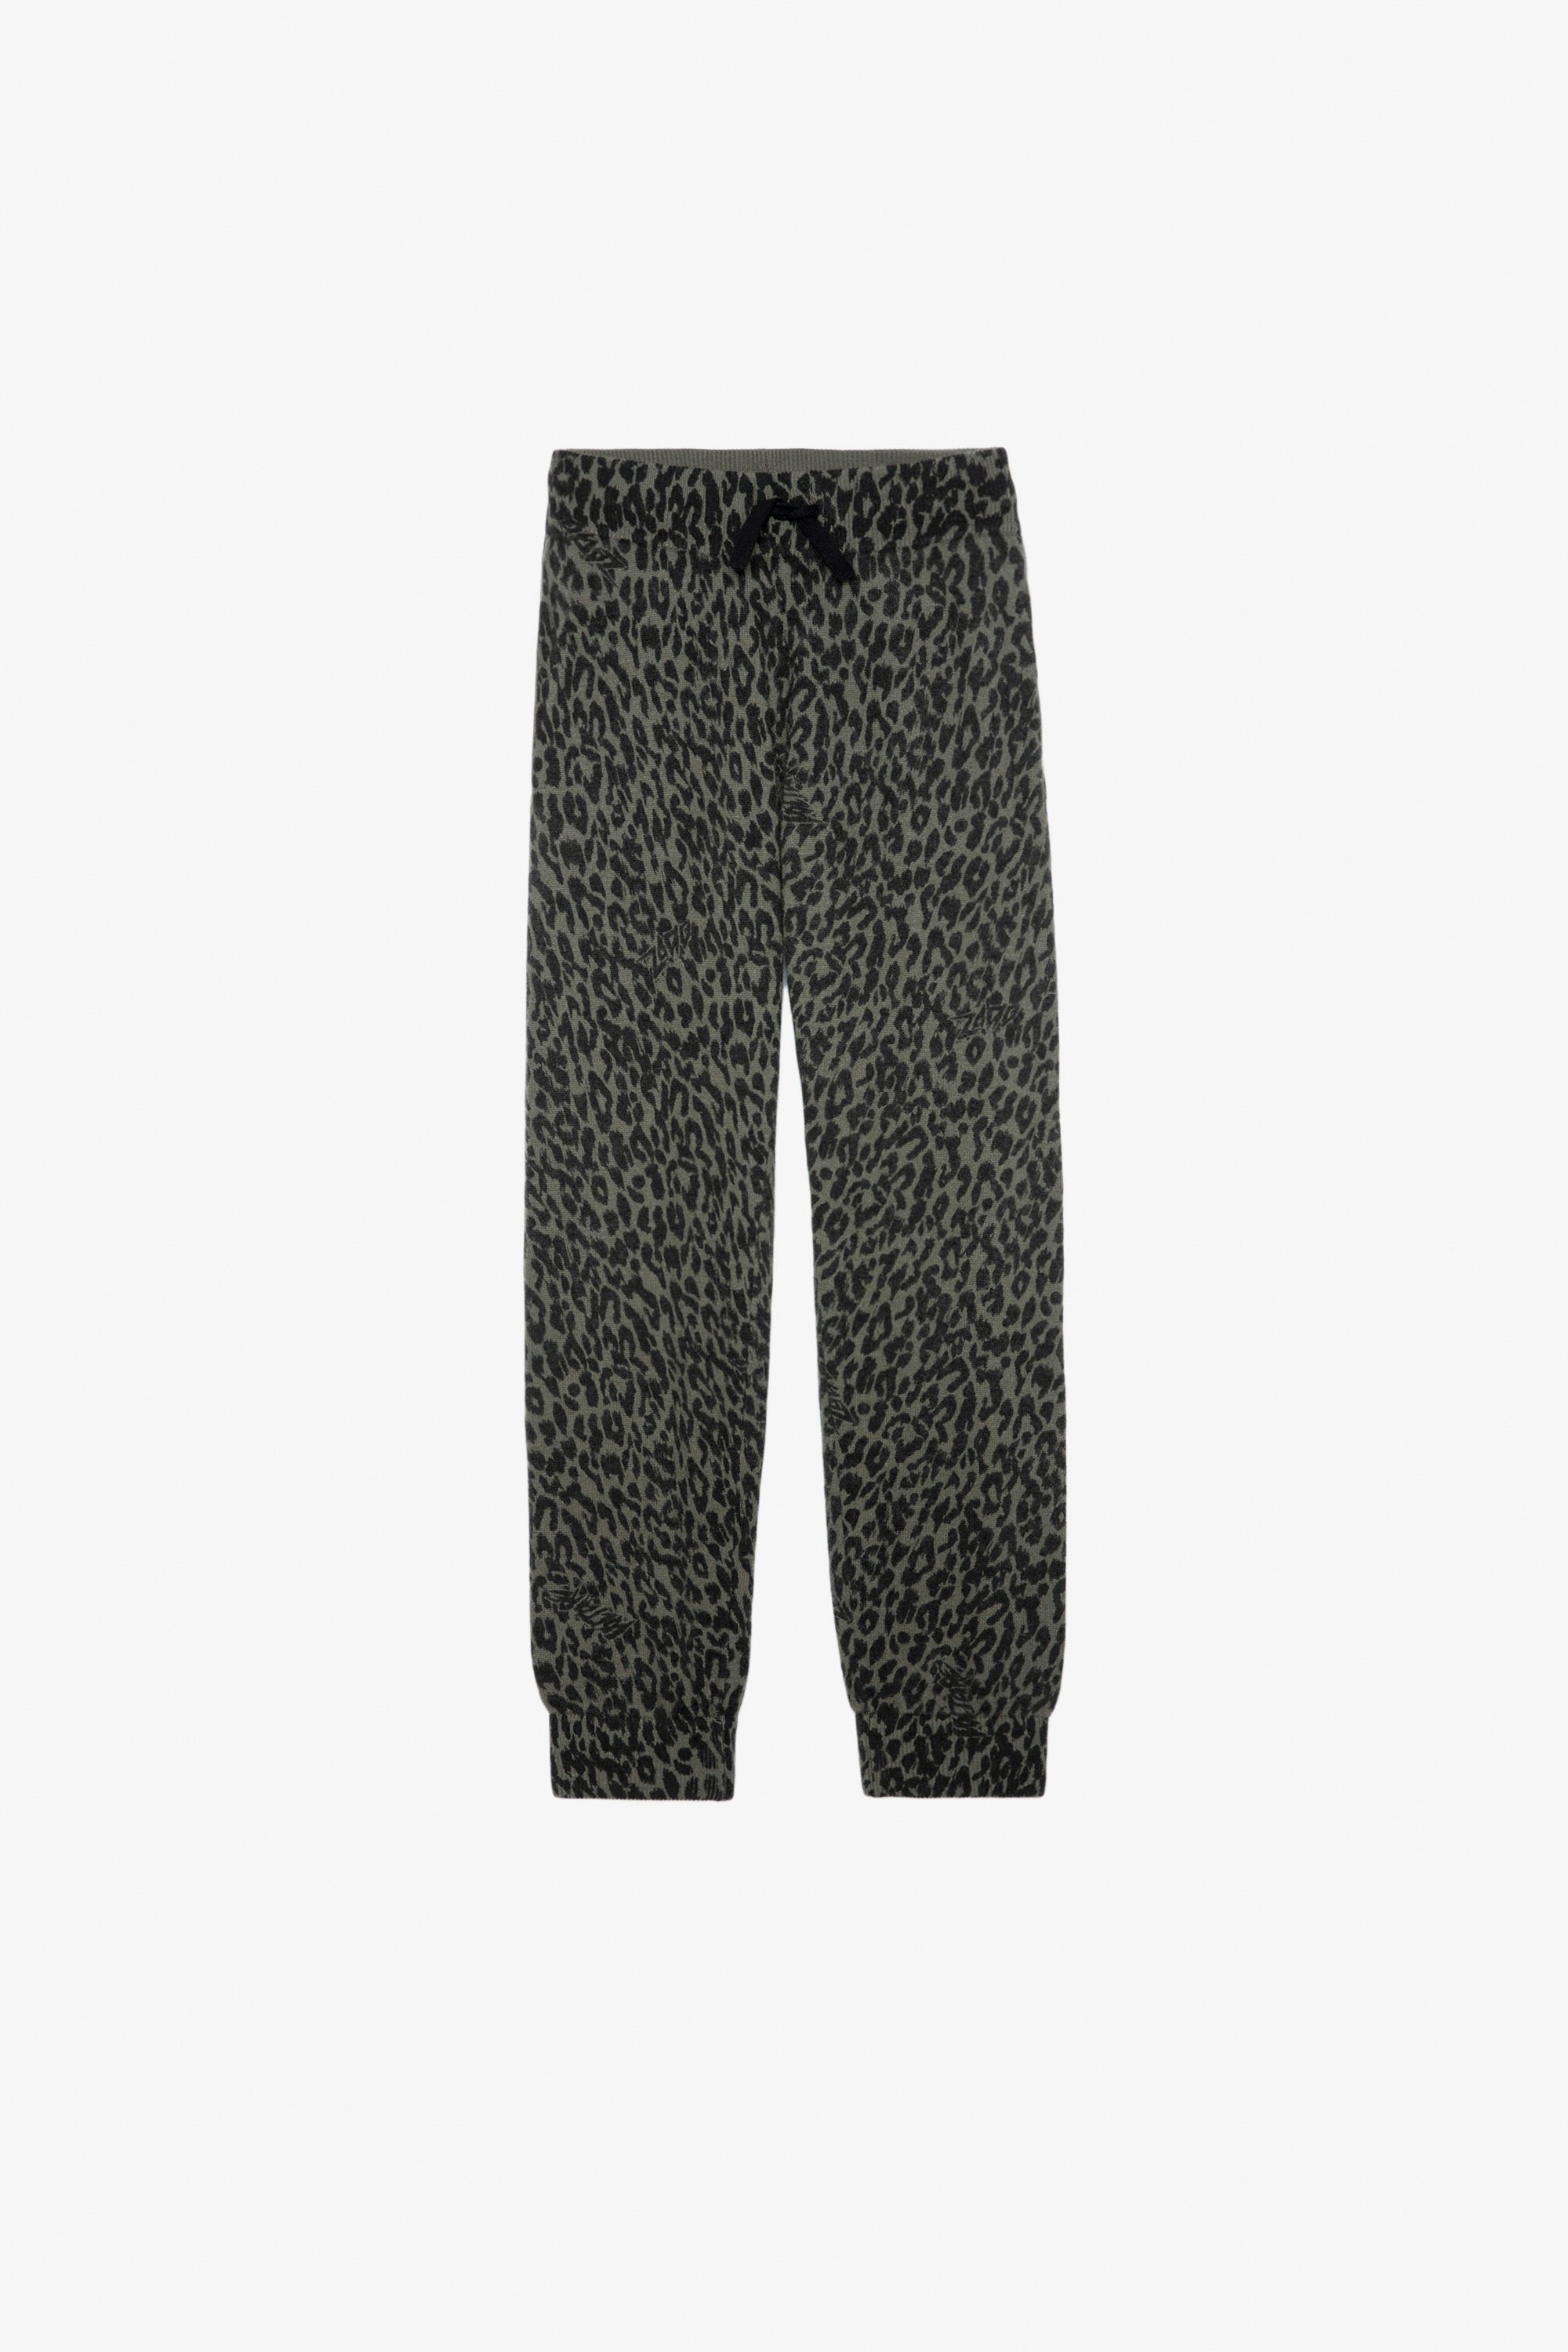 Steevy Girls’ Trousers - Girls’ khaki knit trousers